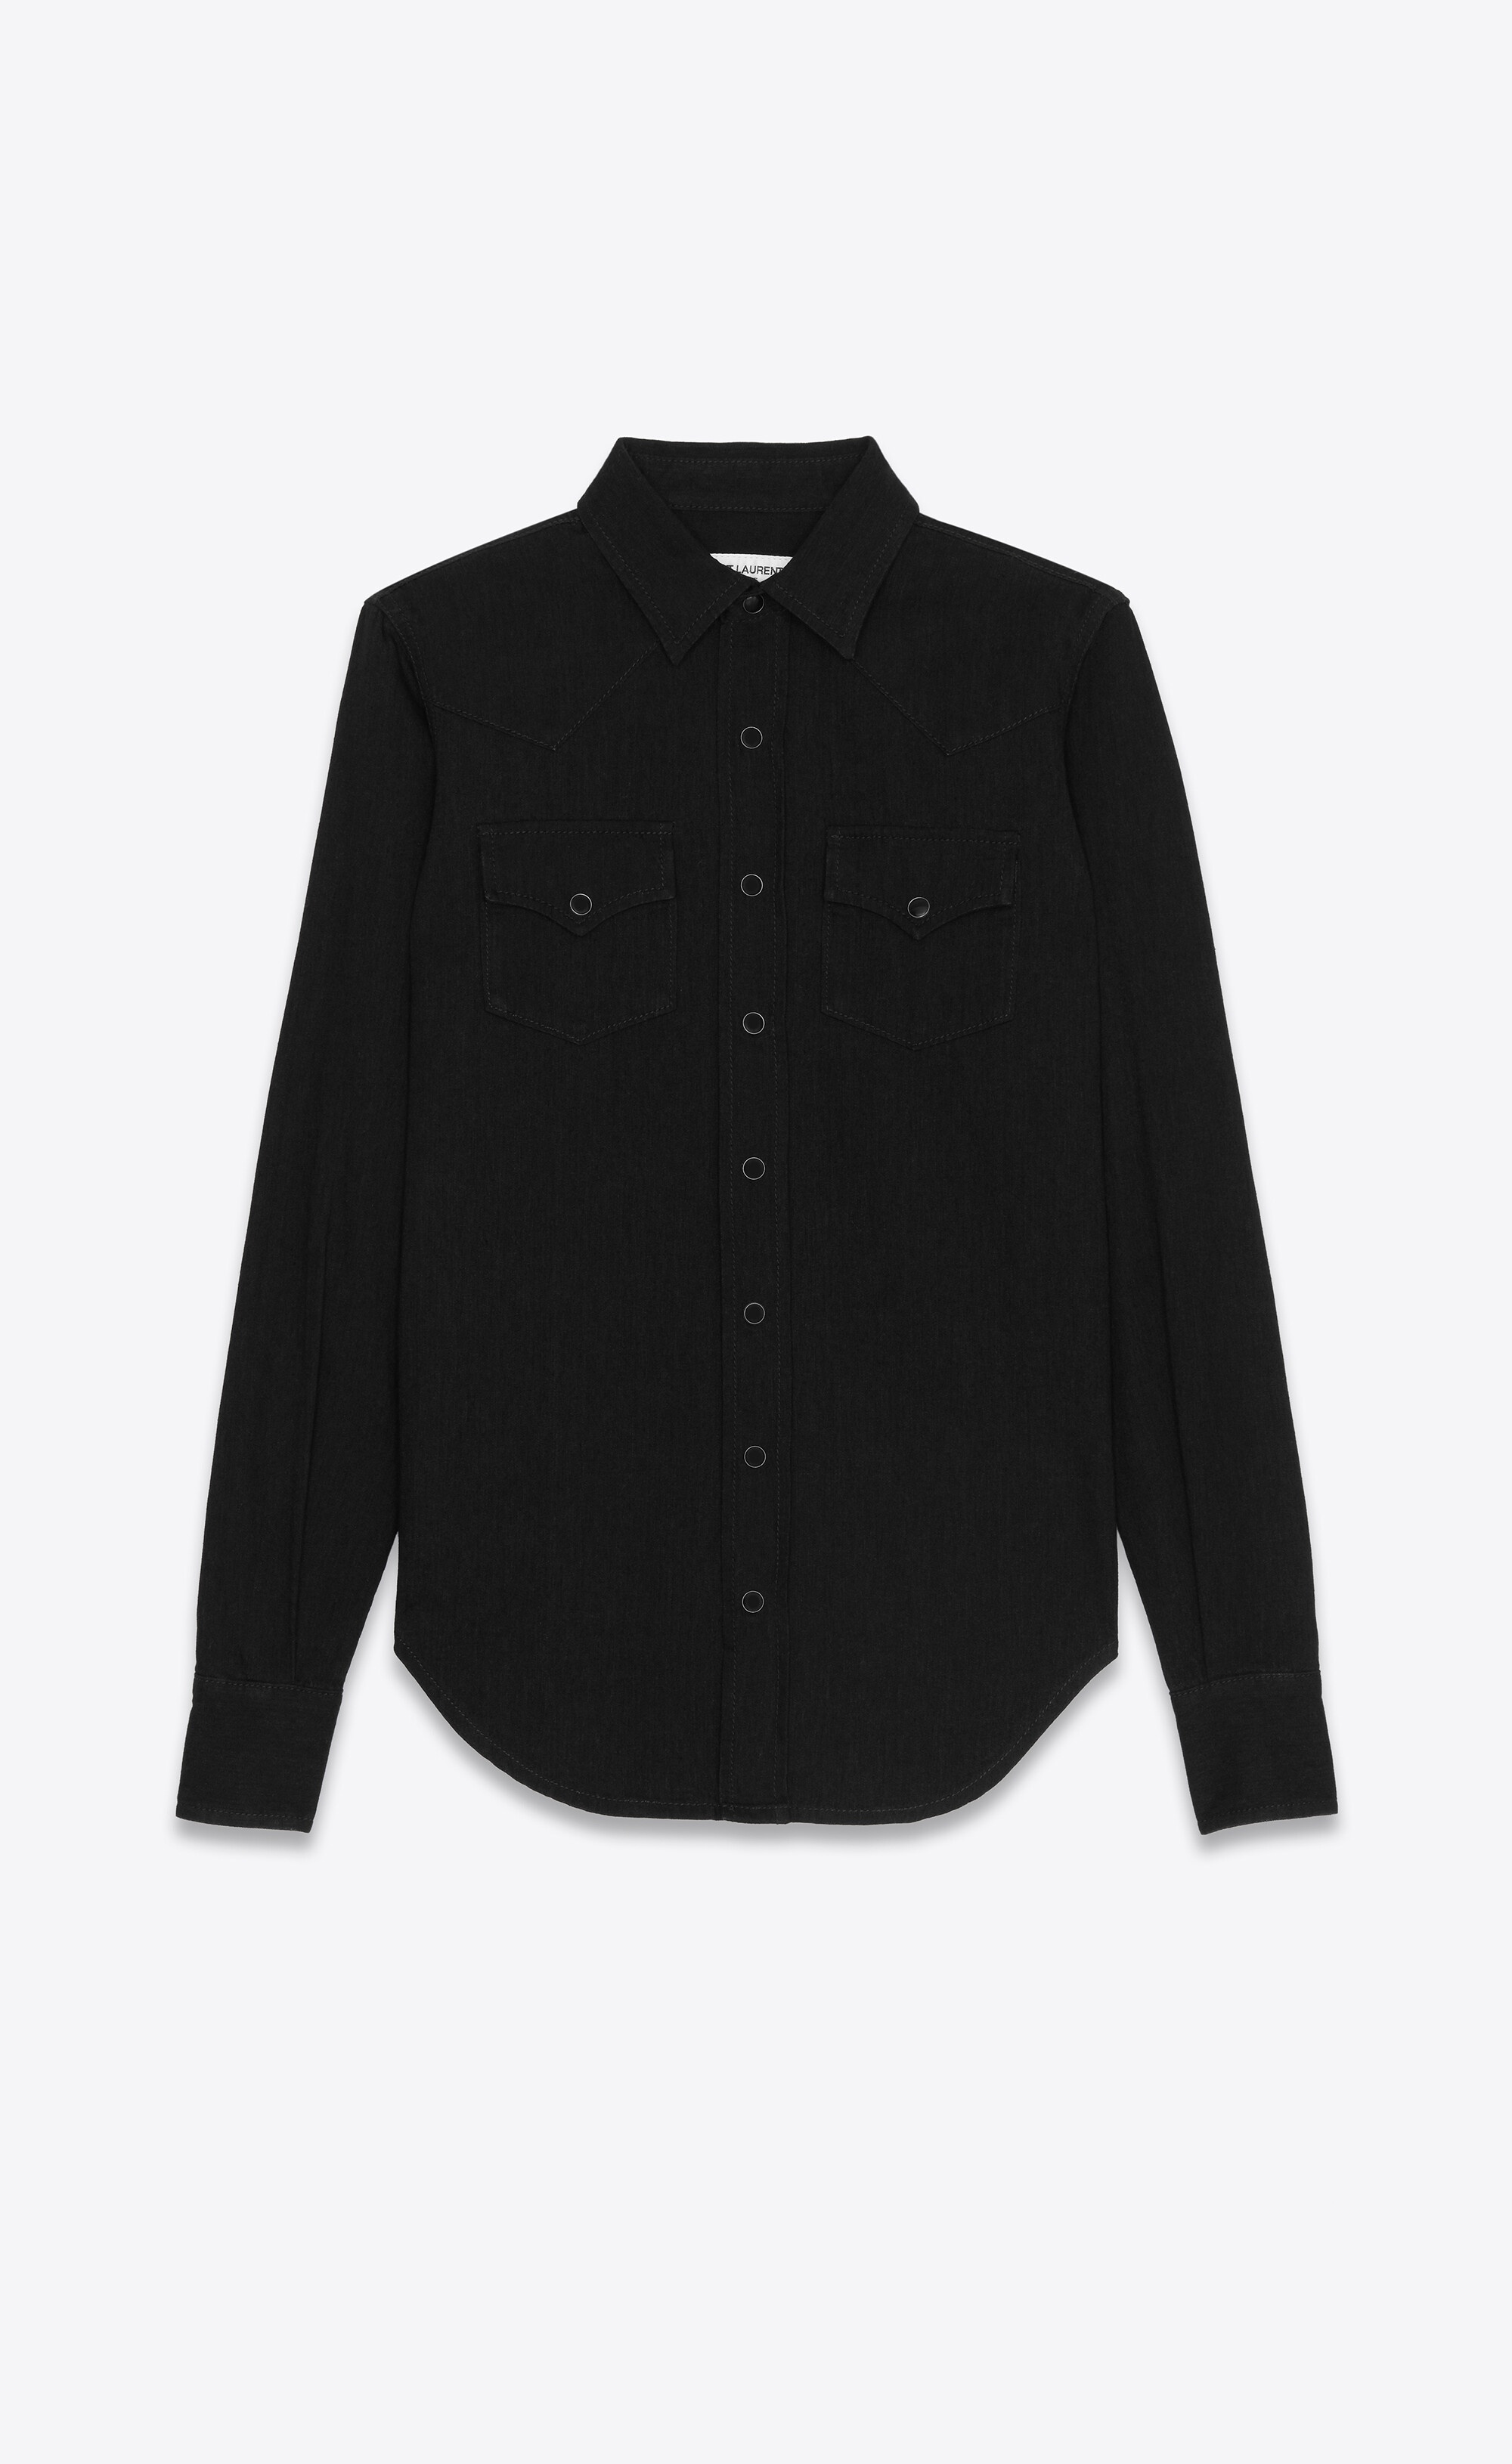 western shirt in black rinse denim - 1